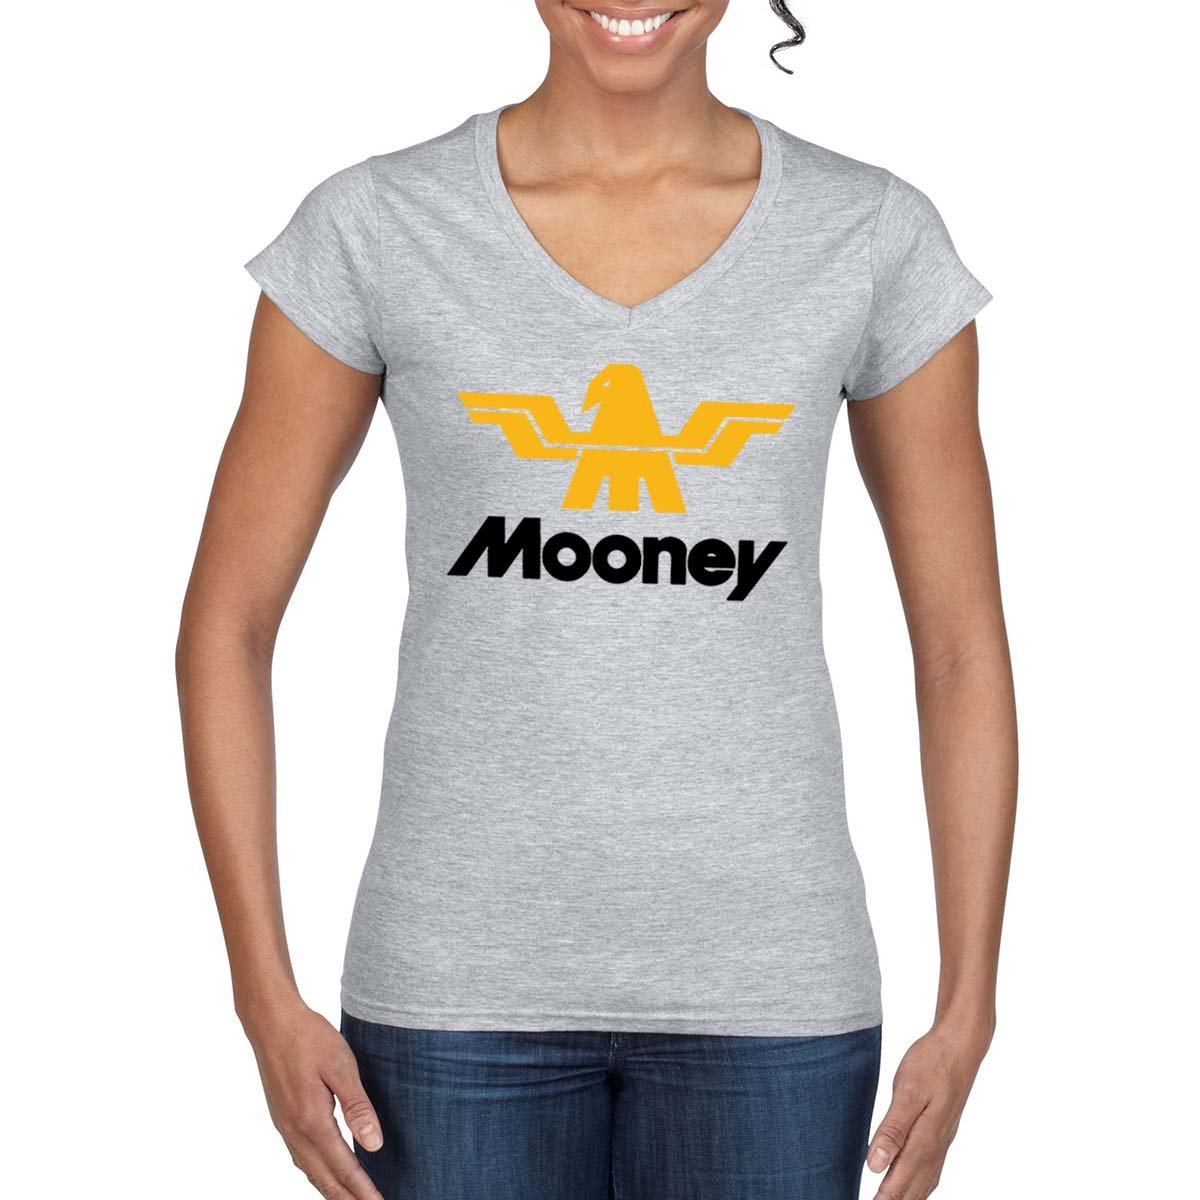 MOONEY Vintage Logo Women's T-Shirt.